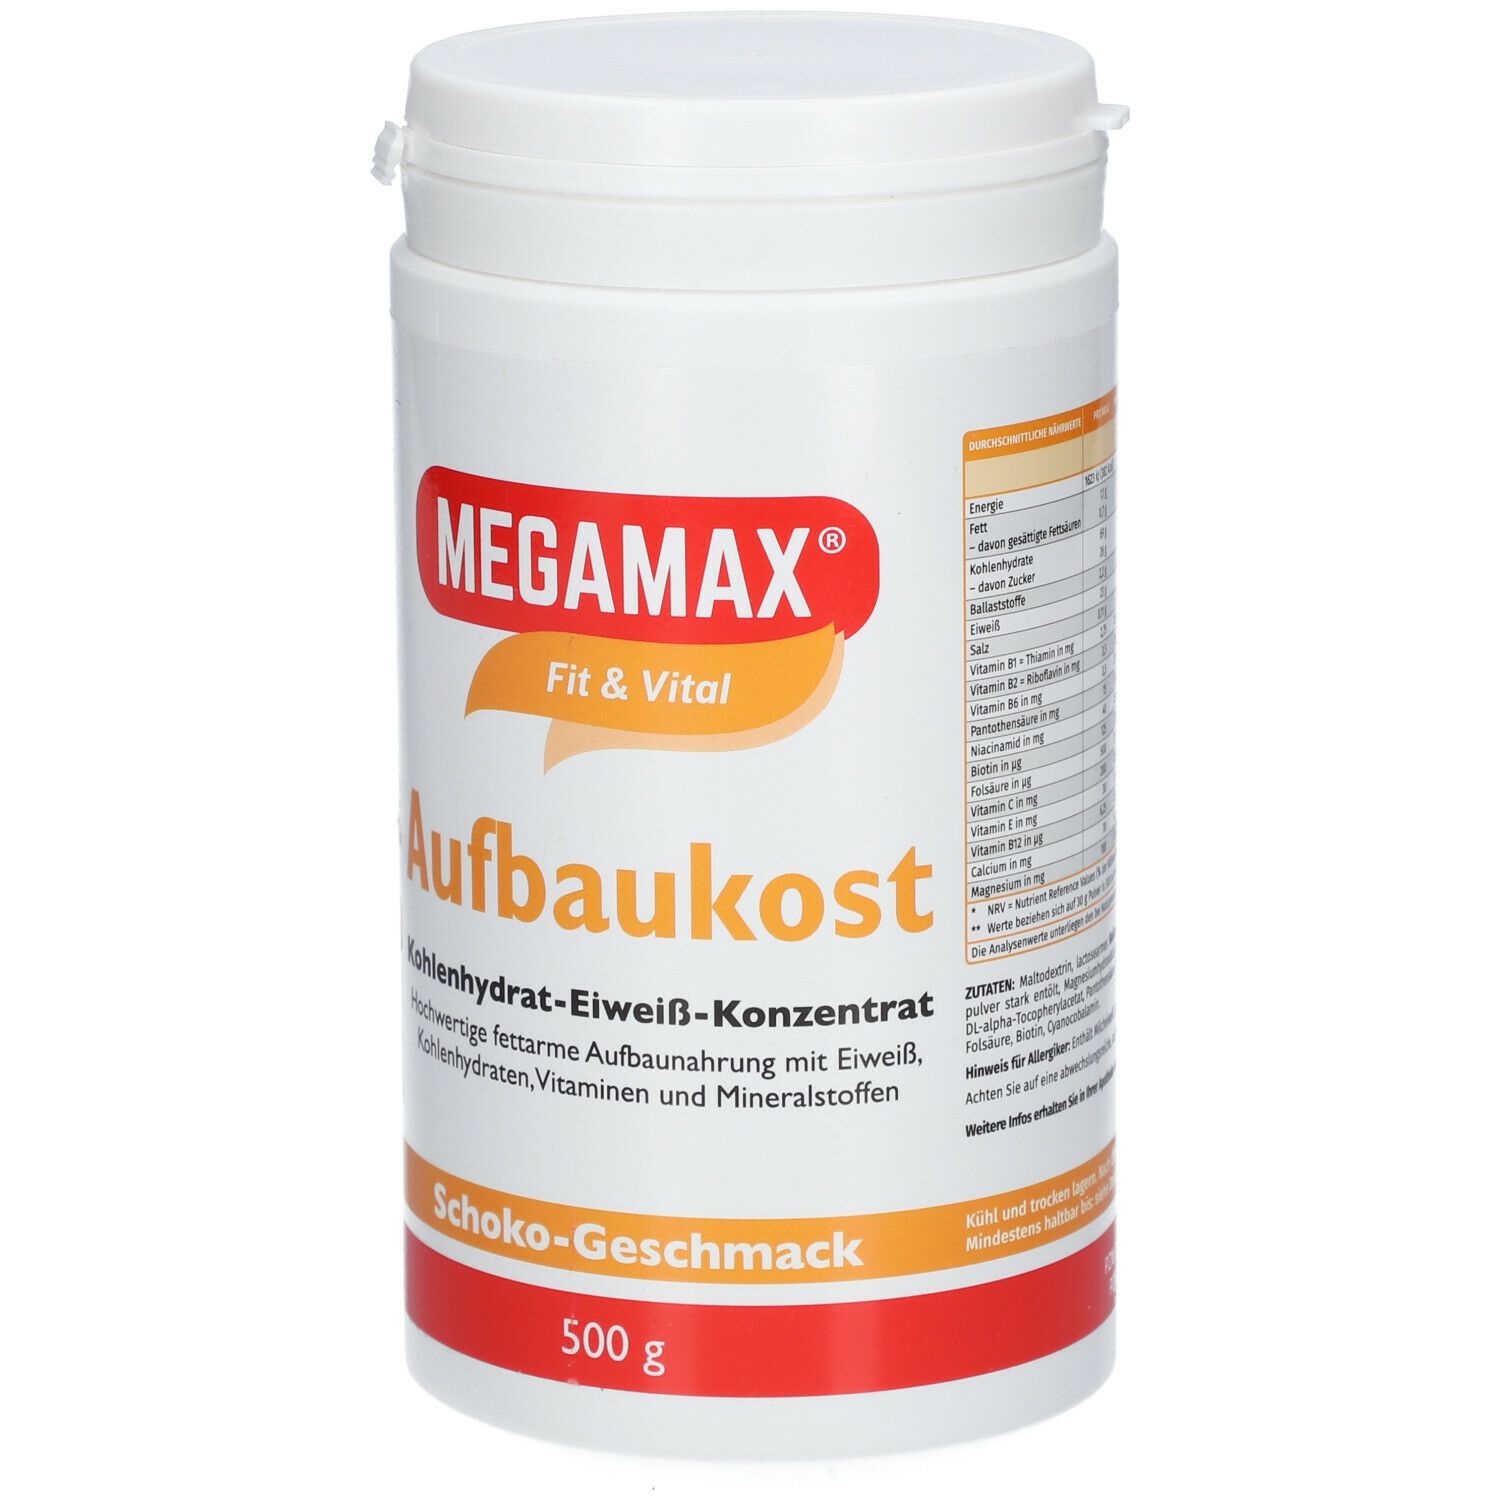 MEGAMAX® Fit & Vital Aufbaukost Kohlenhydrat-Eiweiß-Konzentrat Schoko-Geschmack